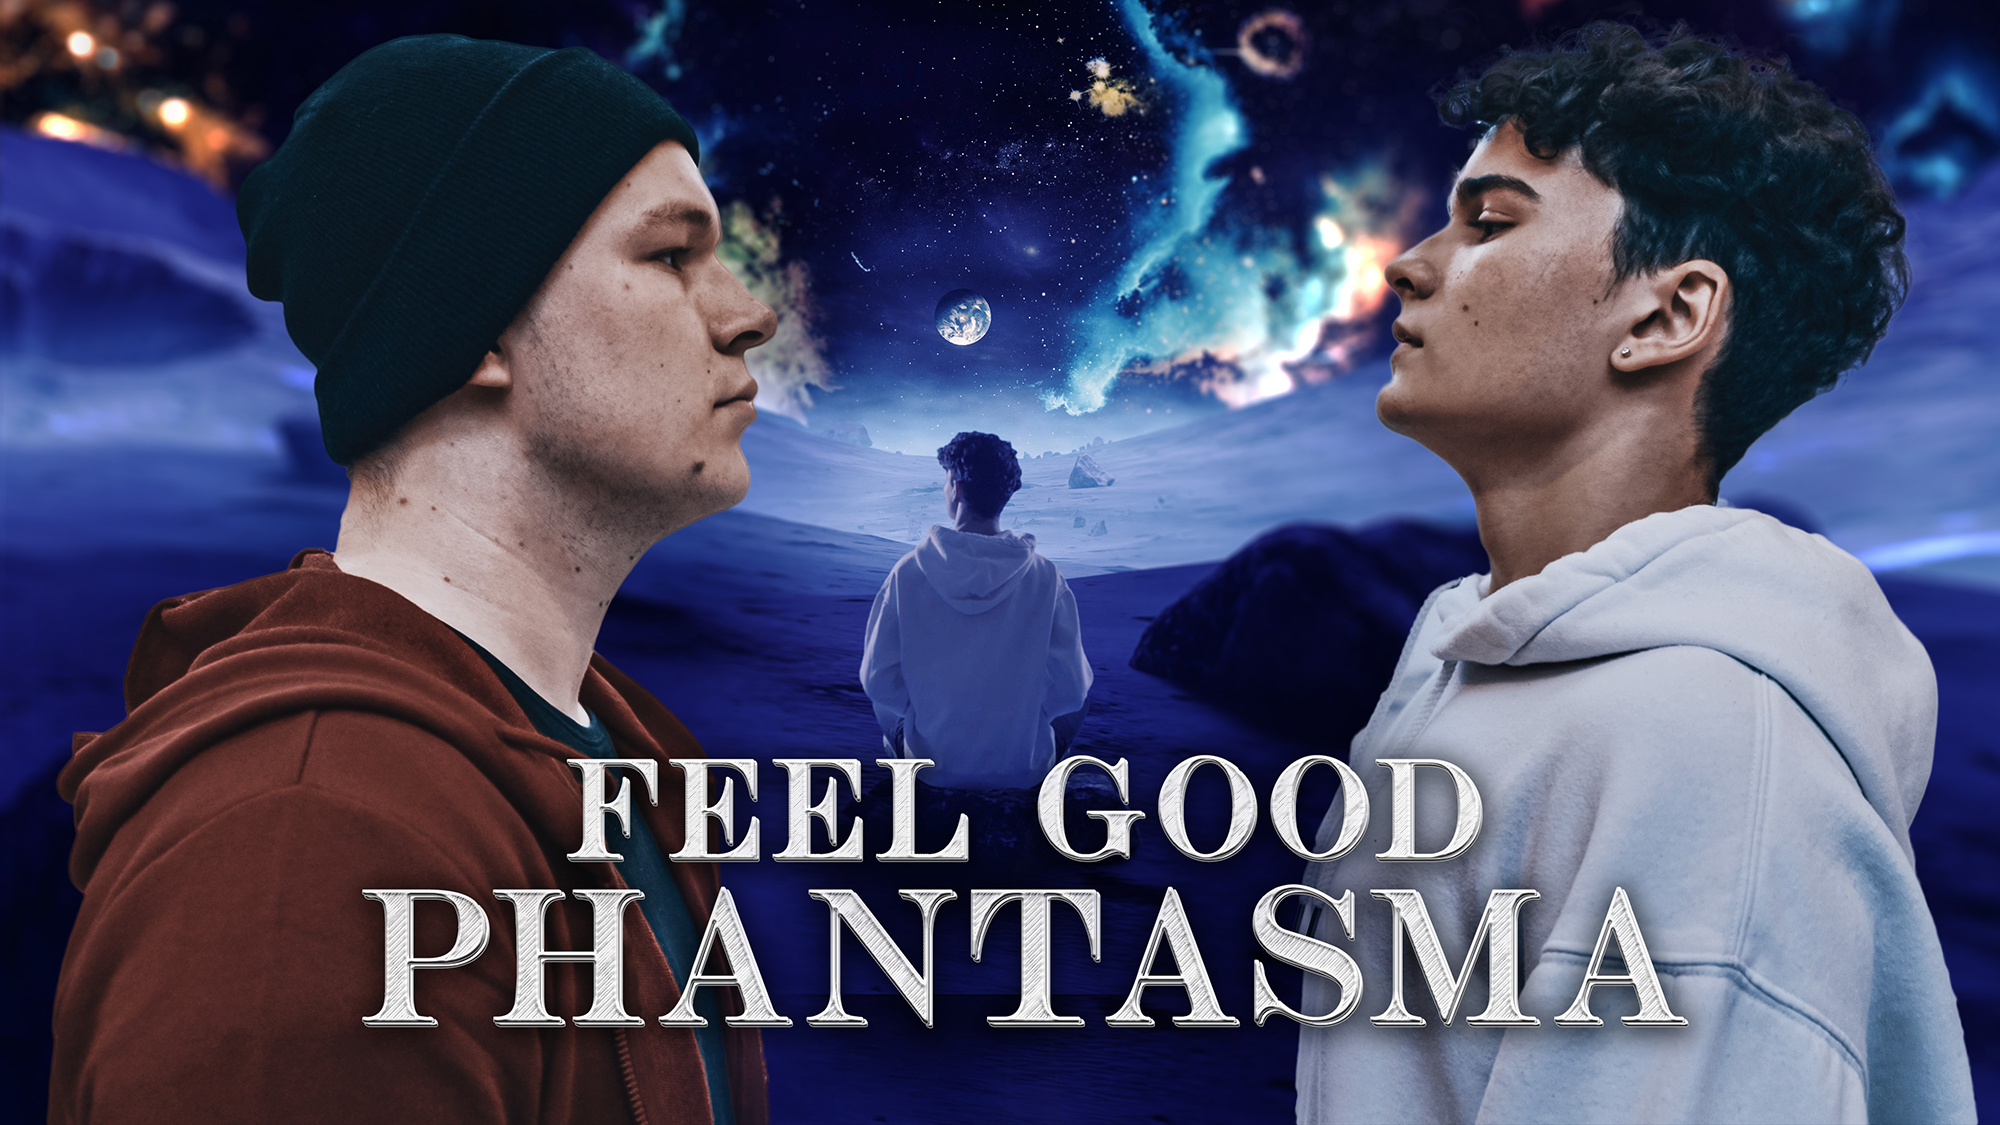 Feel Good Phantasma